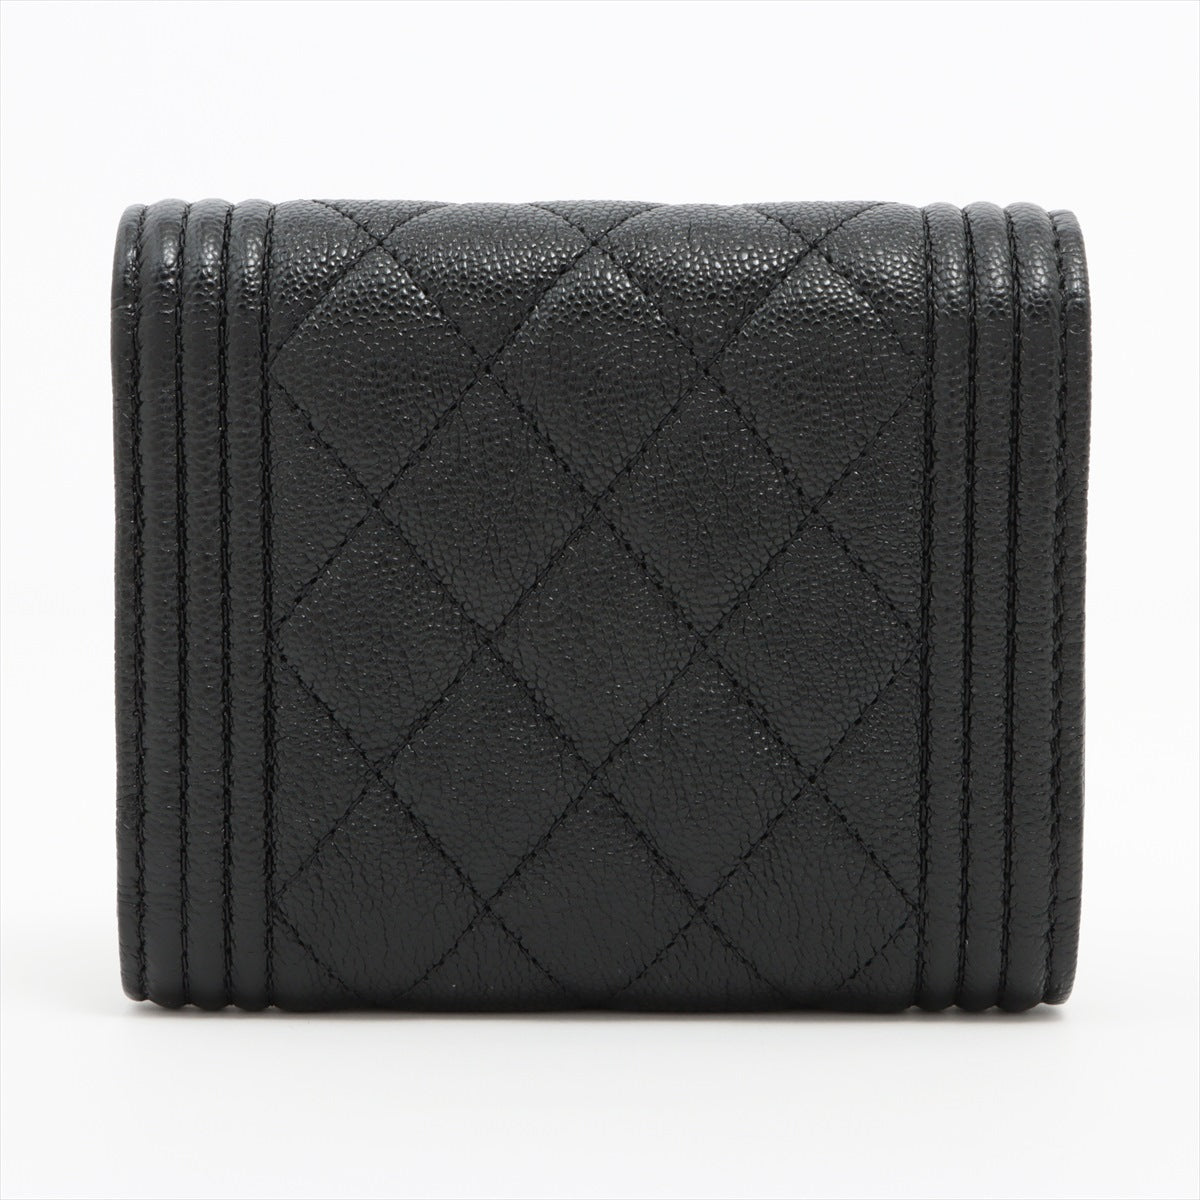 Chanel Boy Chanel Caviarskin Wallet Black Silver Metal fittings 28th